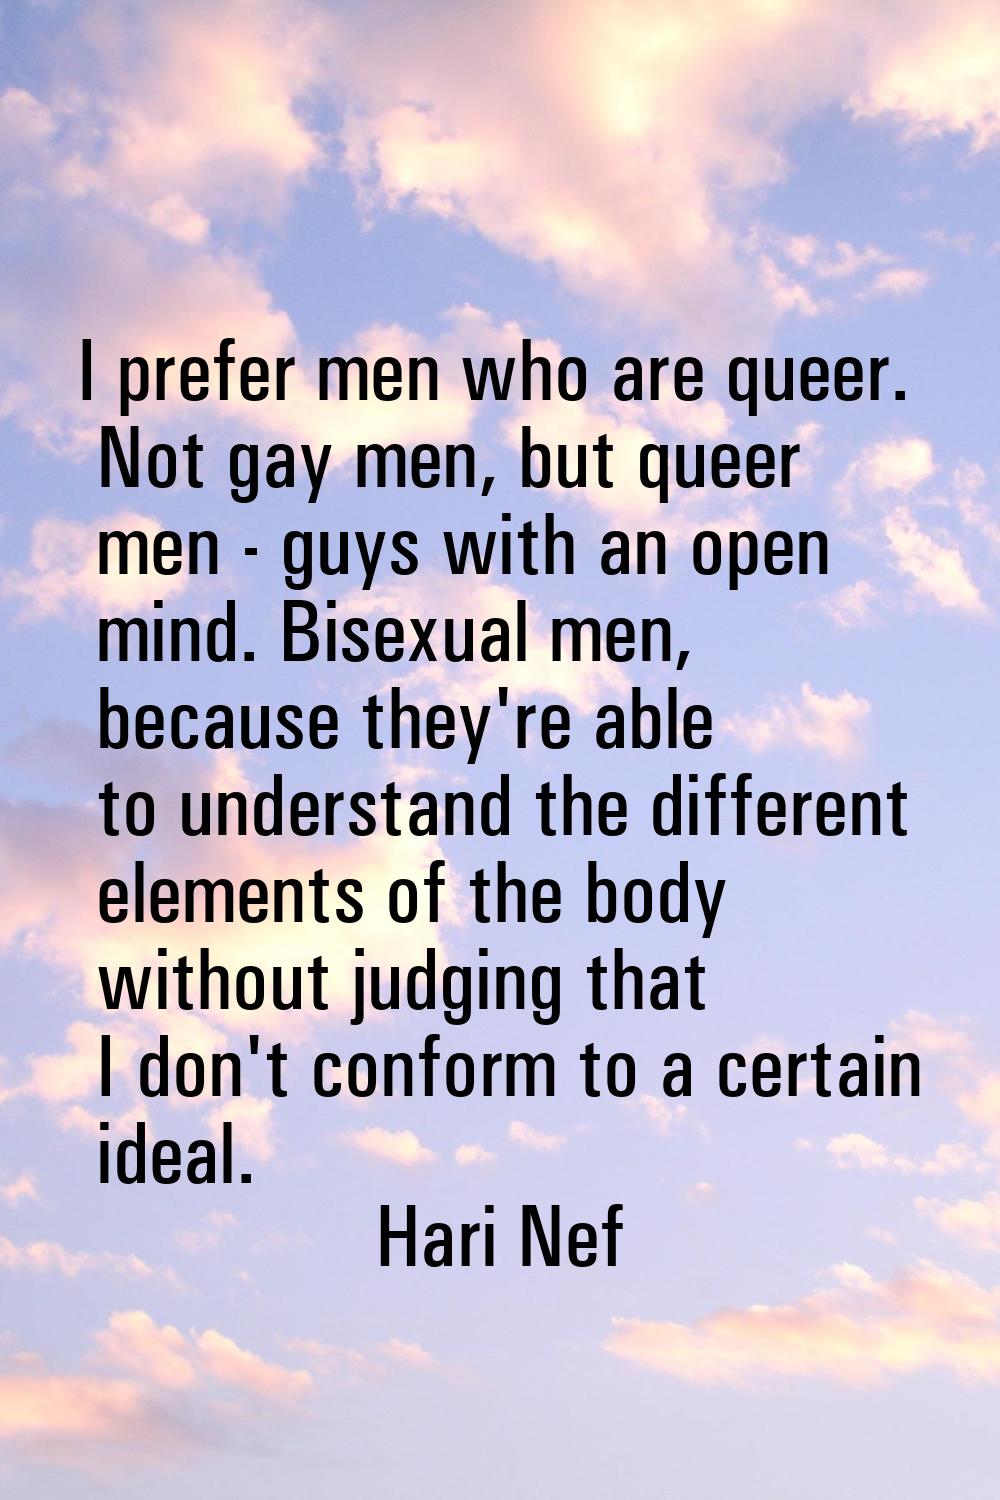 I prefer men who are queer. Not gay men, but queer men - guys with an open mind. Bisexual men, beca